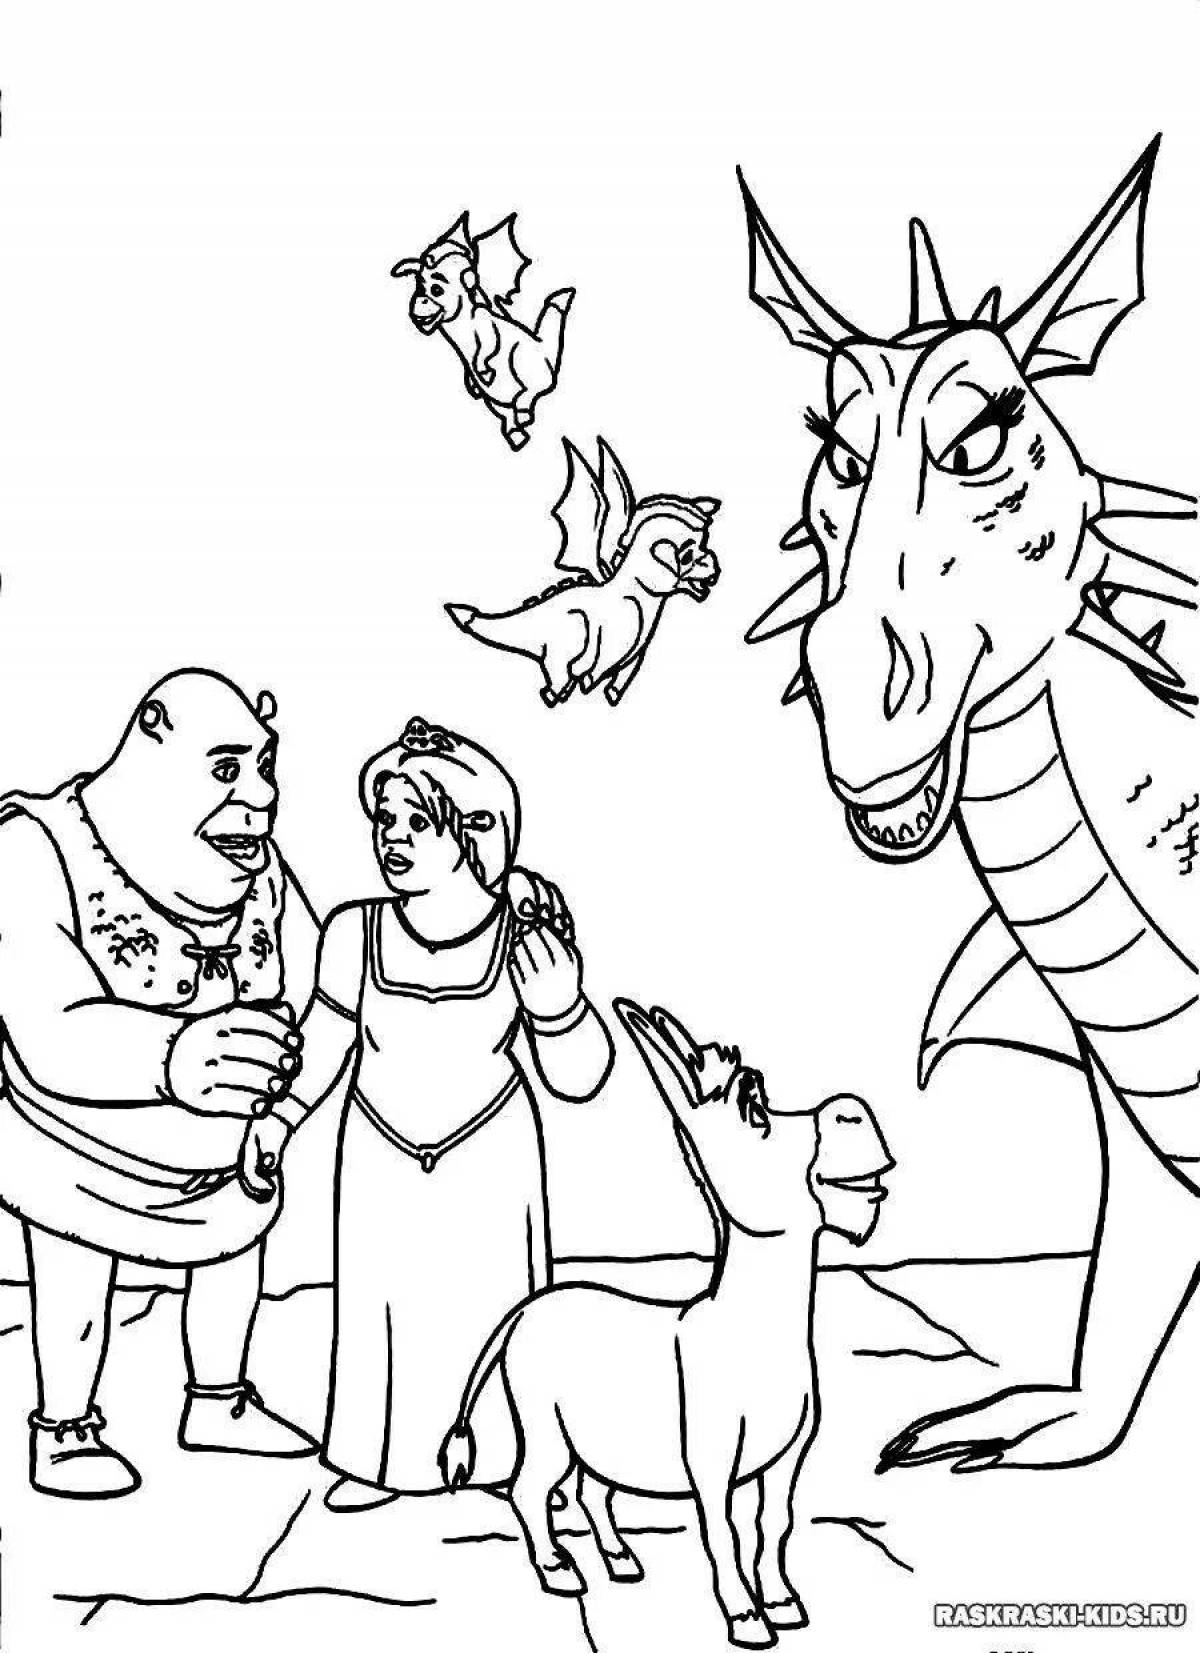 Joyful Shrek coloring book for kids